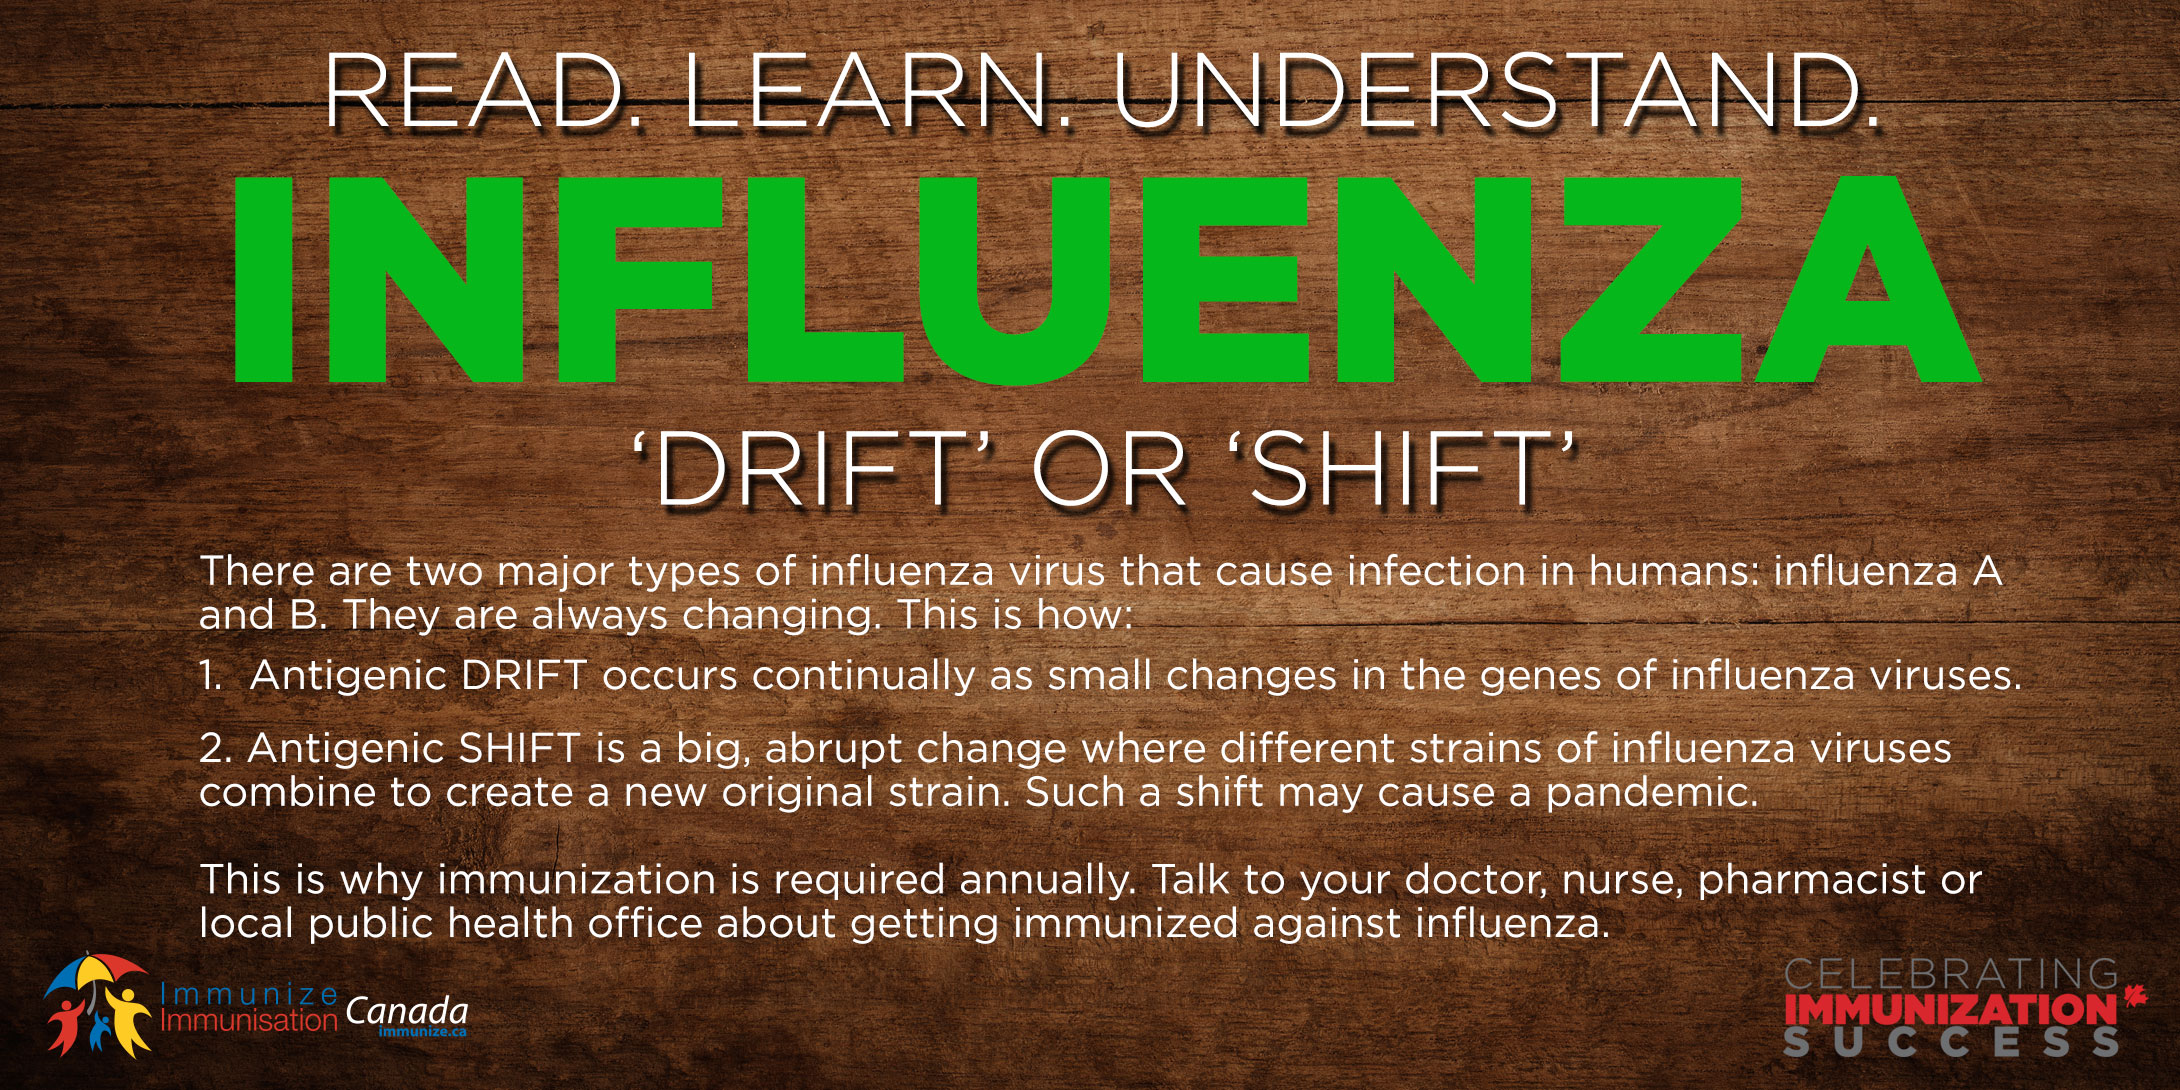 Read. Learn. Understand. Influenza: 'drift' or 'shift'